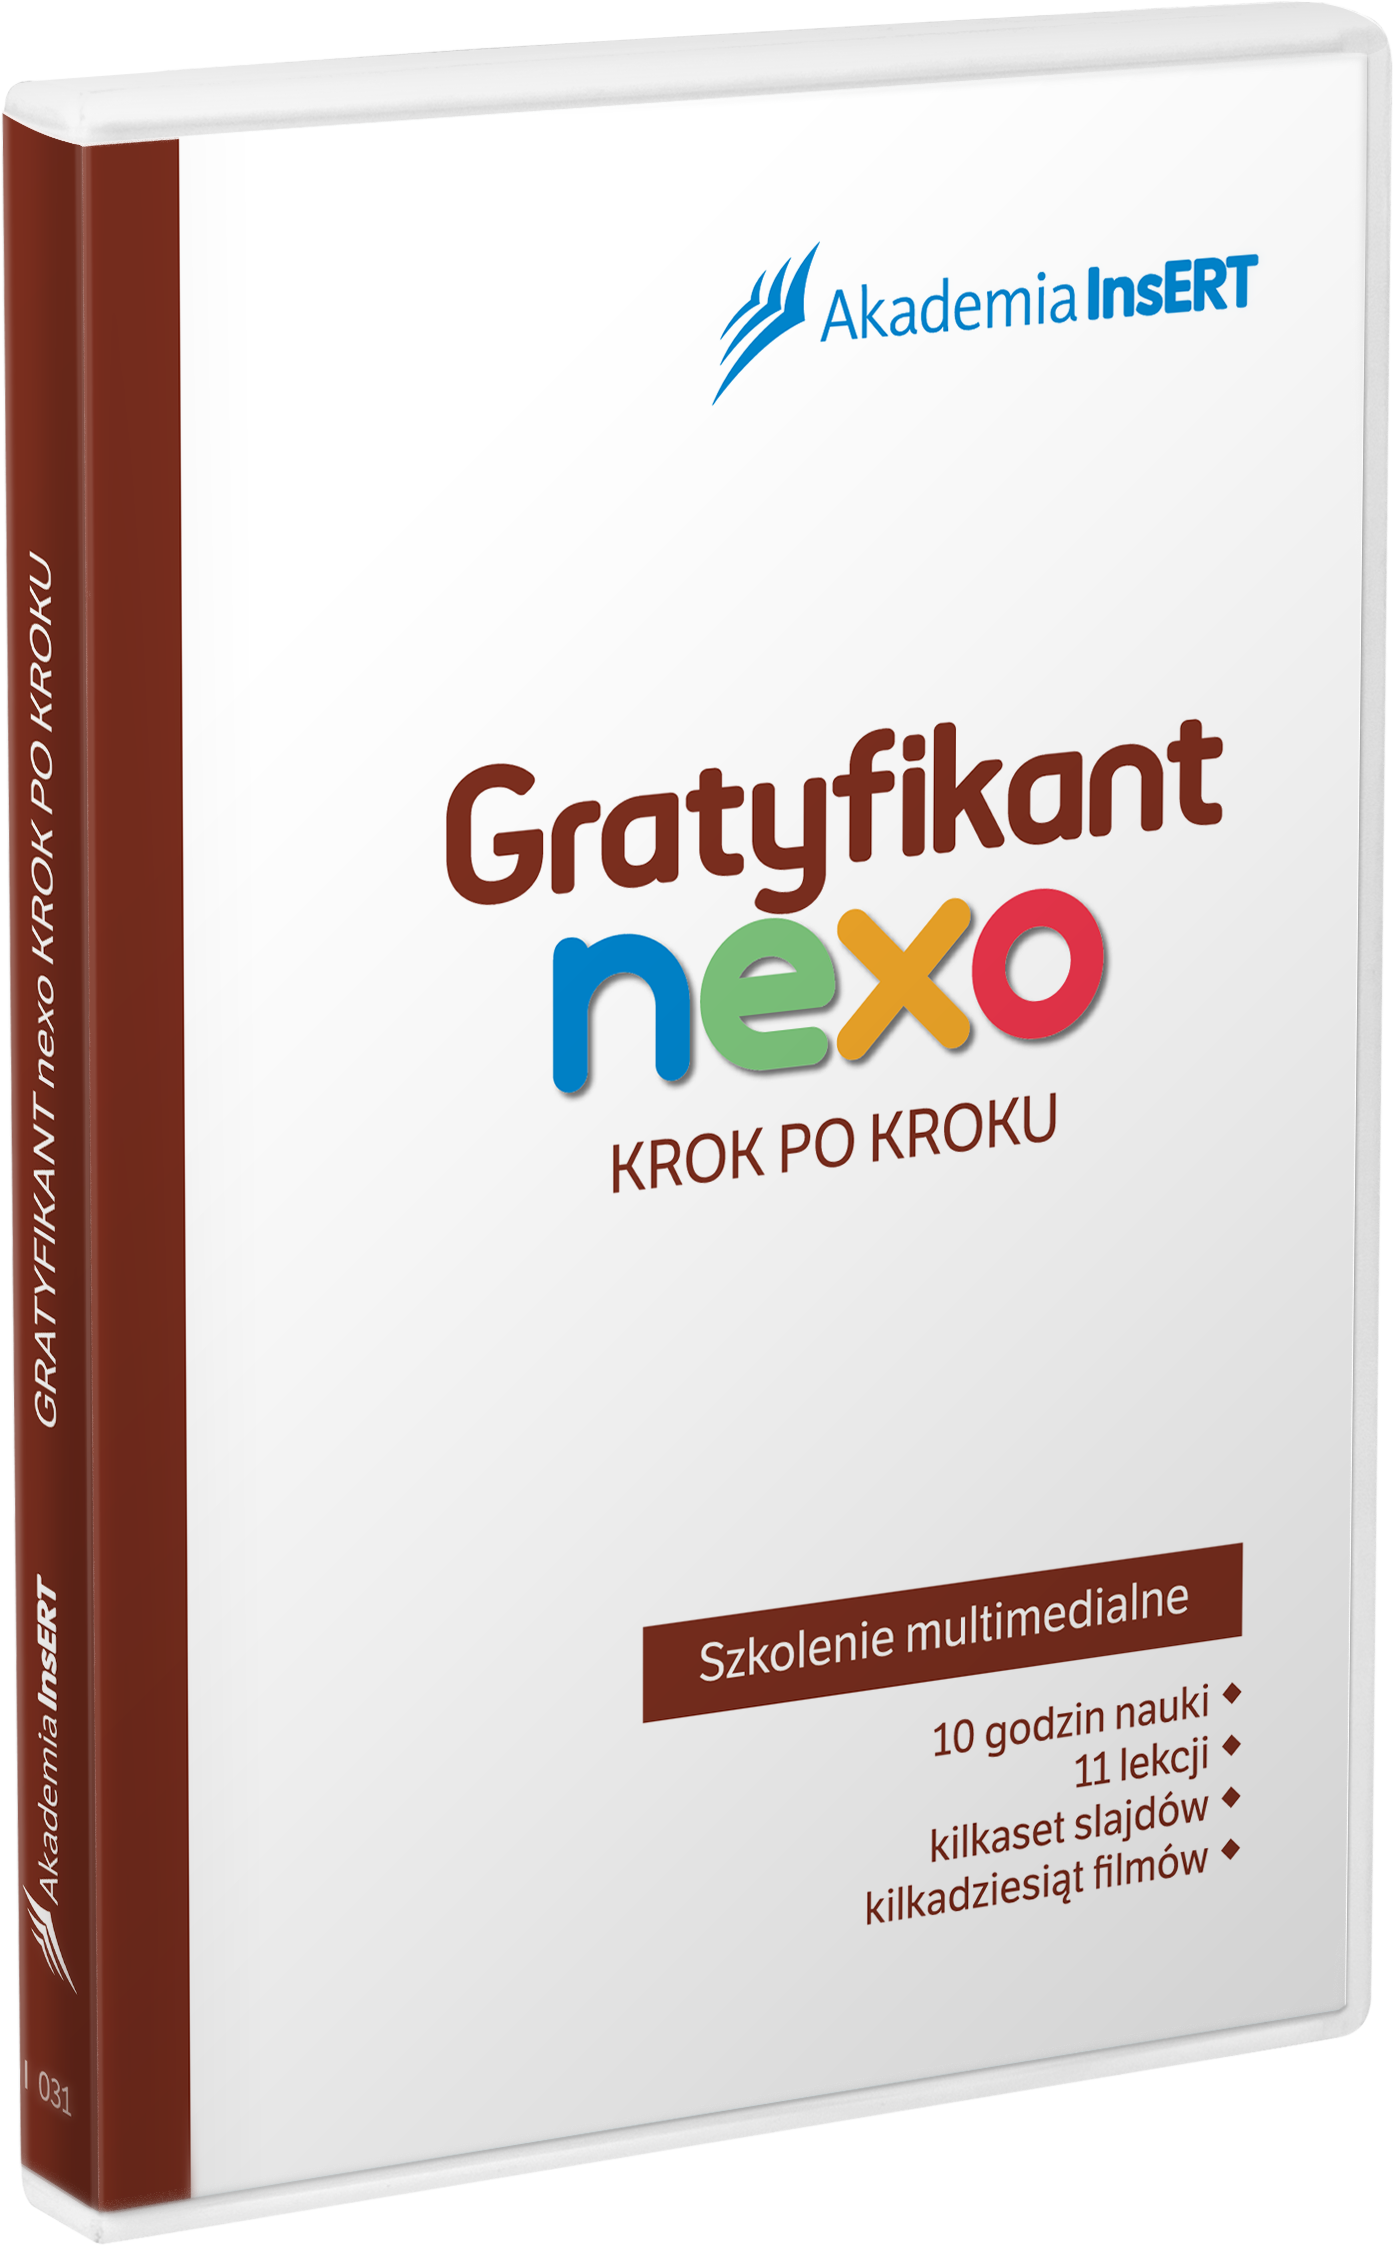 Gratyfikant_nexo_krok_po_kroku.png